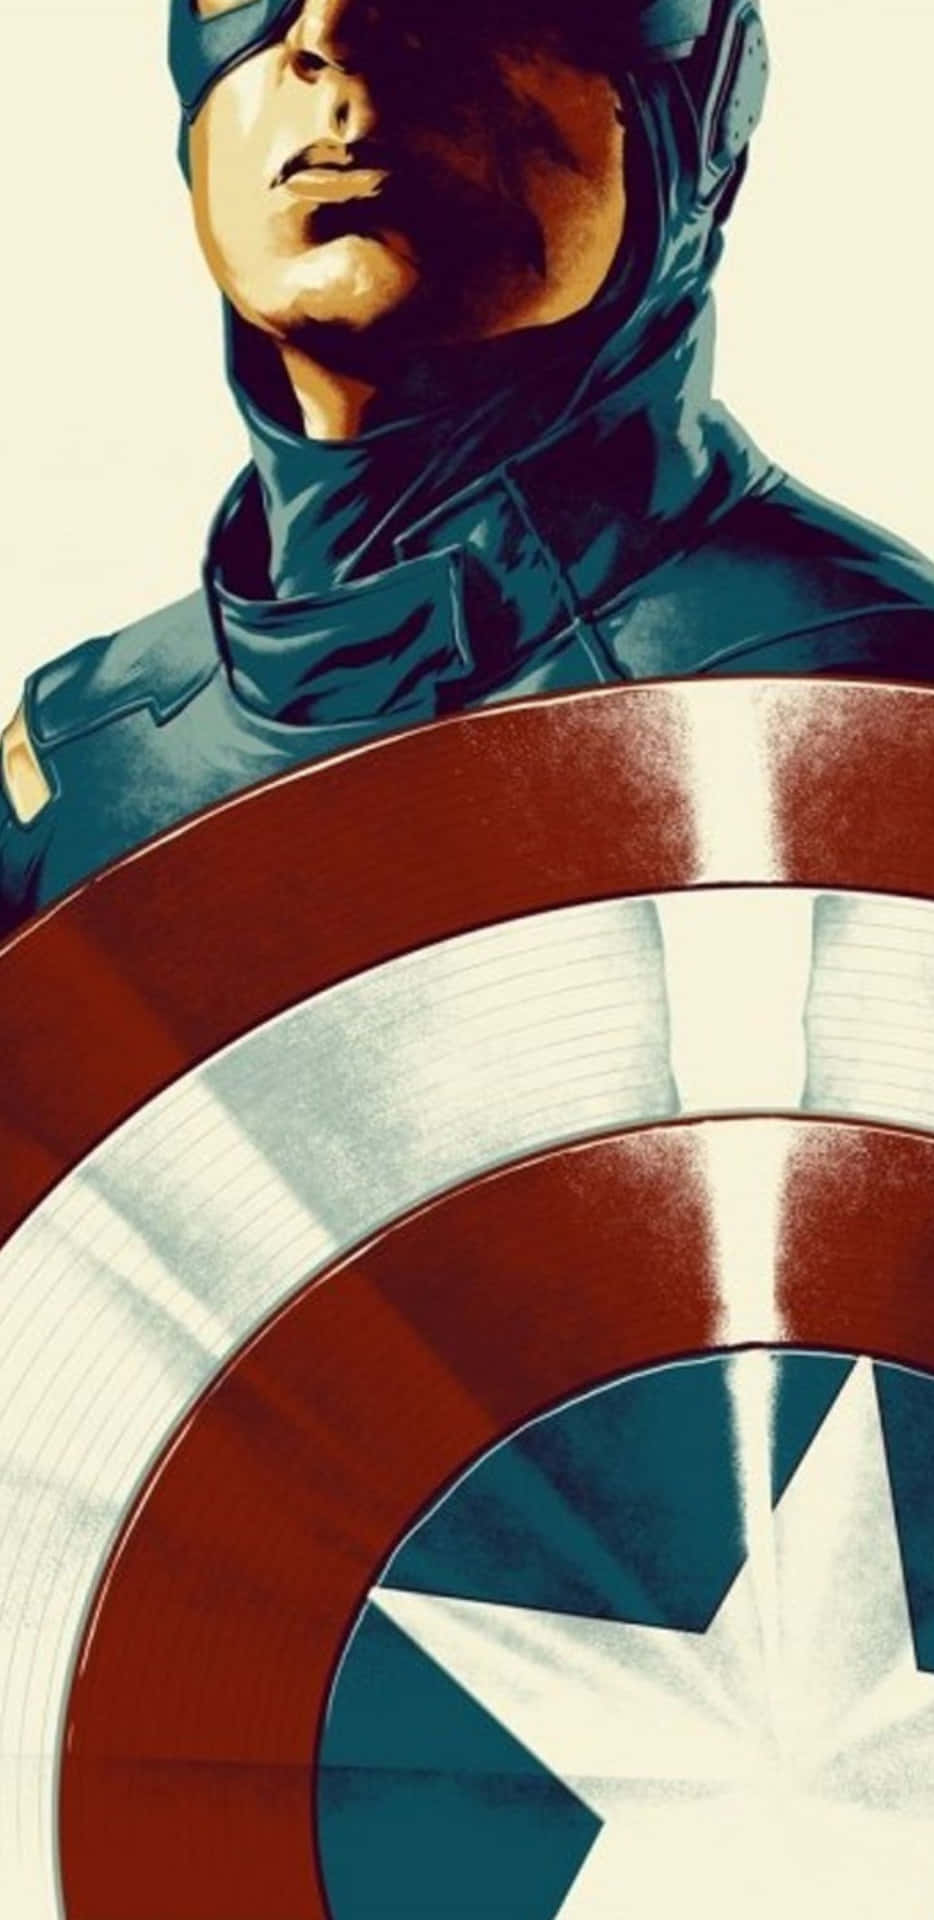 Pixel3xl Captain America Bakgrund Vector Art.